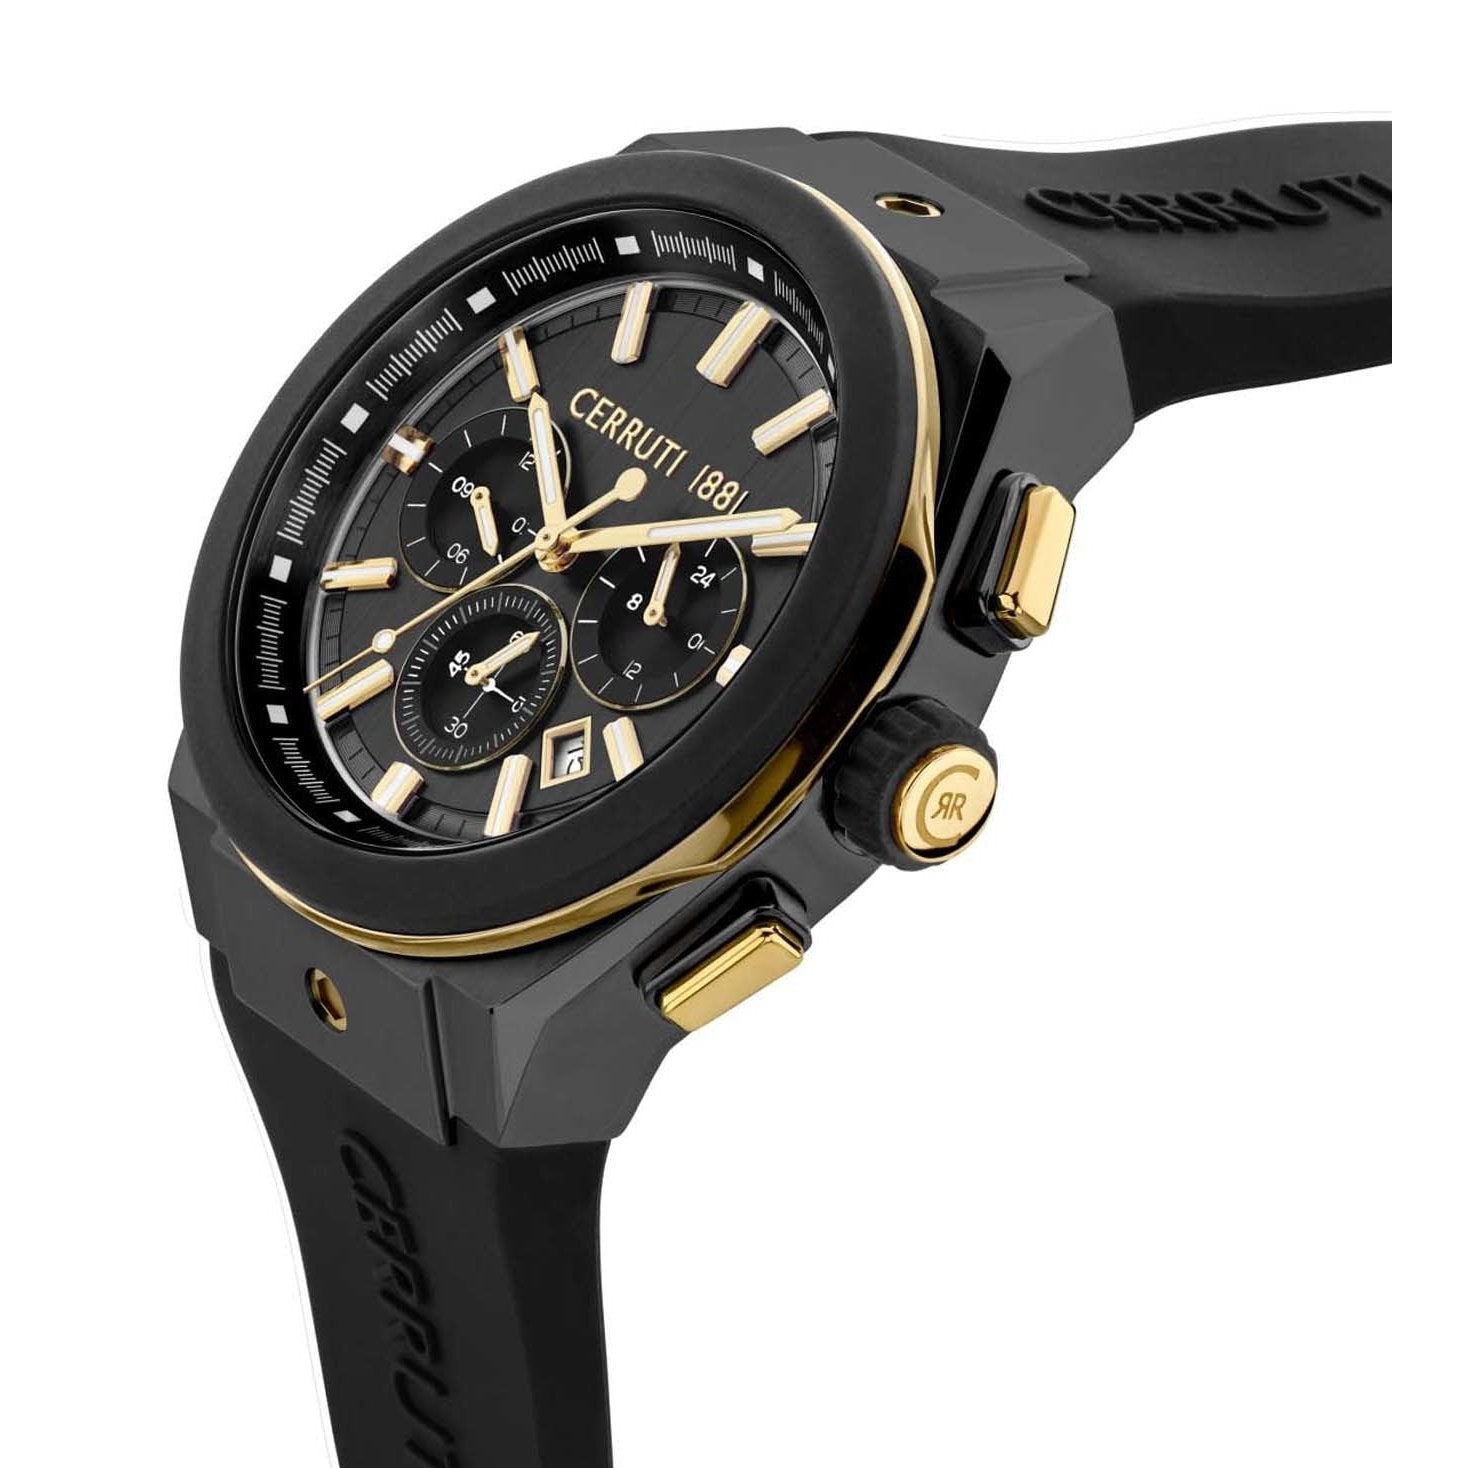 Titan Watches brings Cerruti 1881 to India - Retail Updates